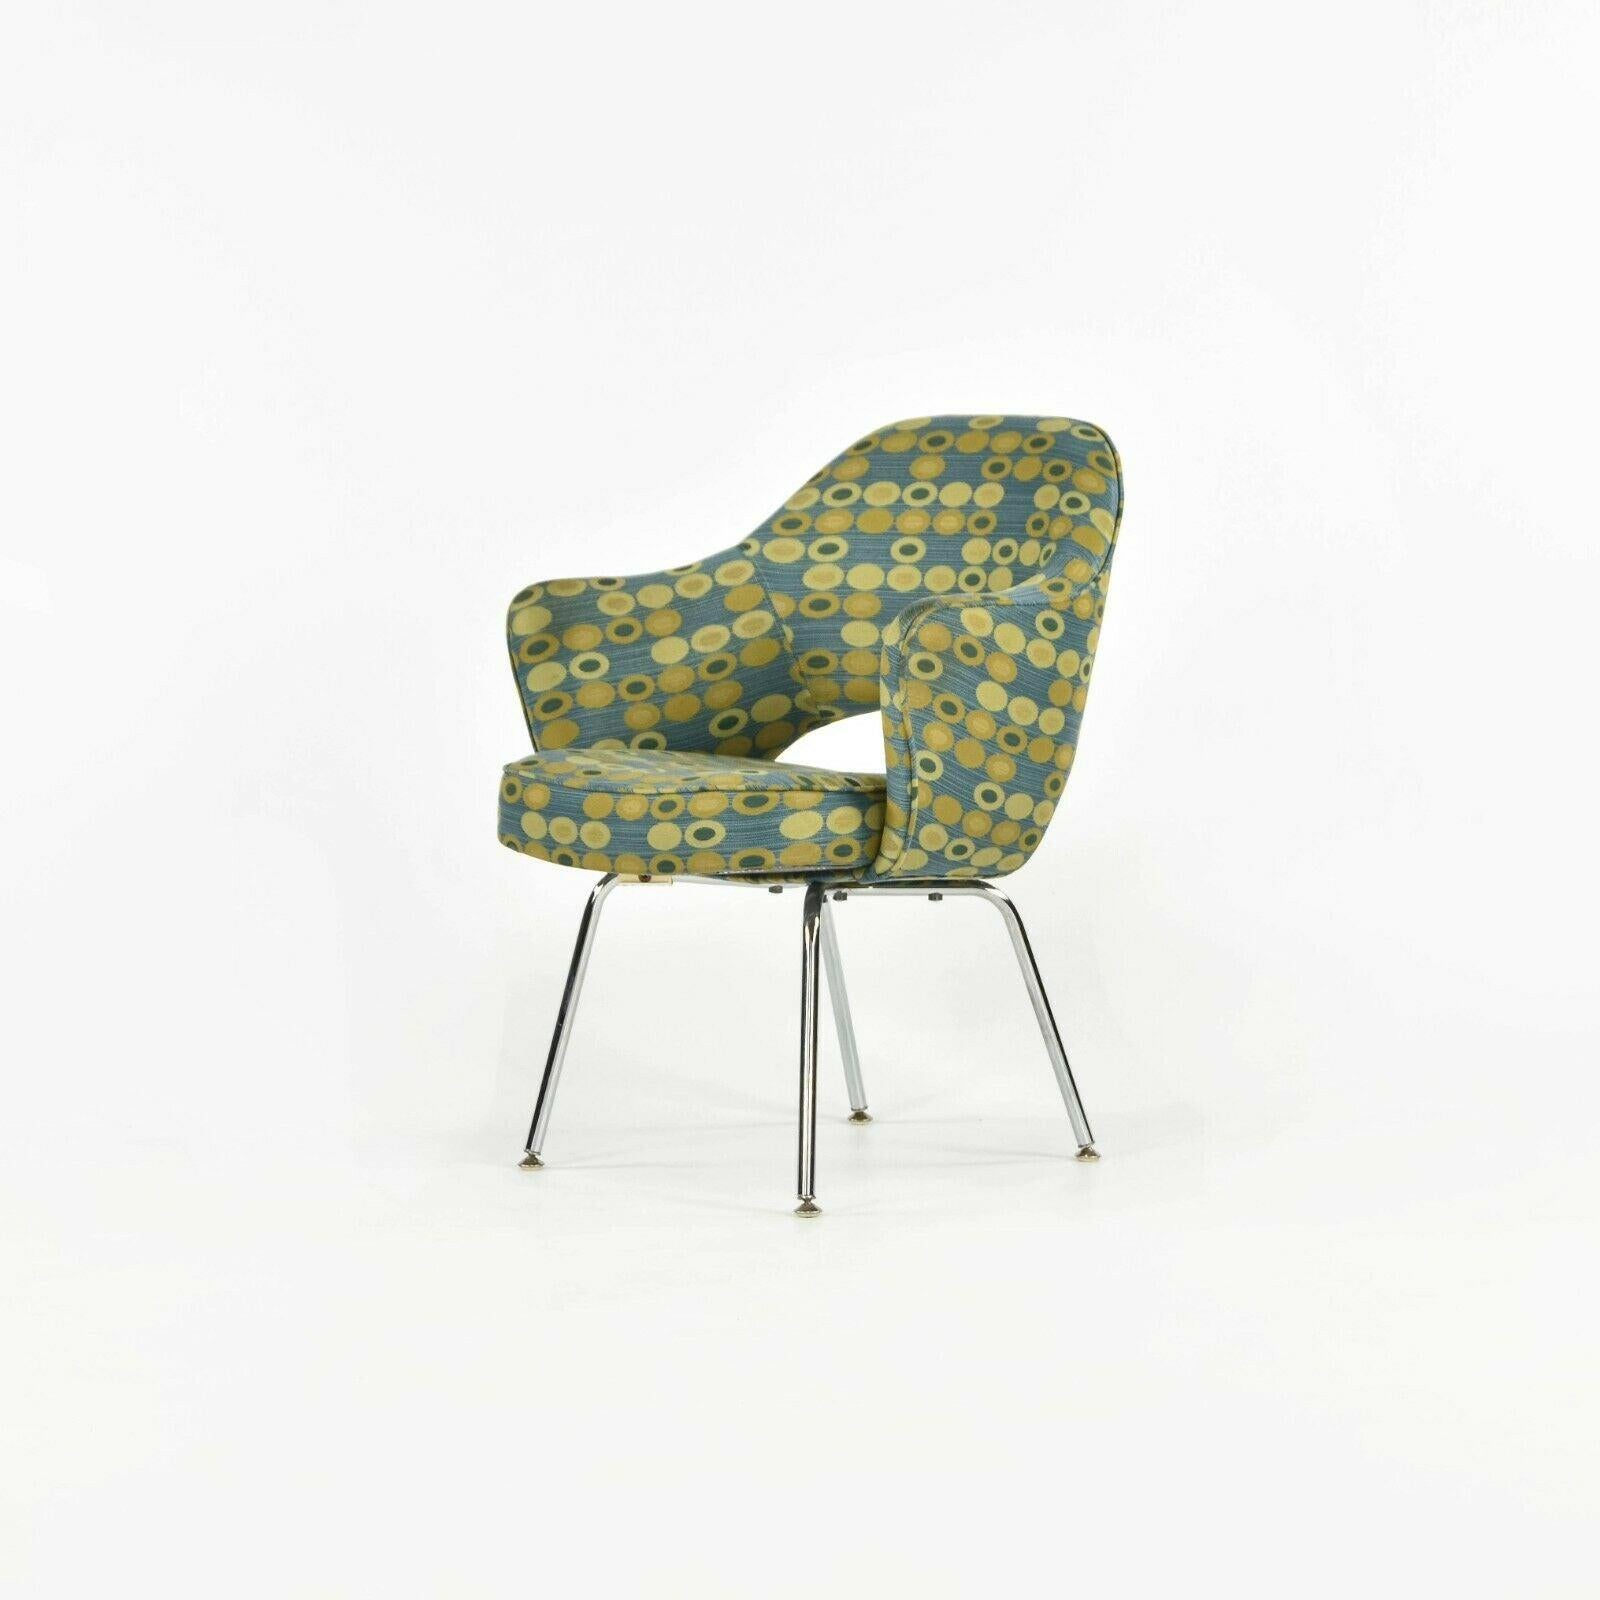 2008 Eero Saarinen for Knoll Executive Dining Arm Chair Abacus Fabric For Sale 1